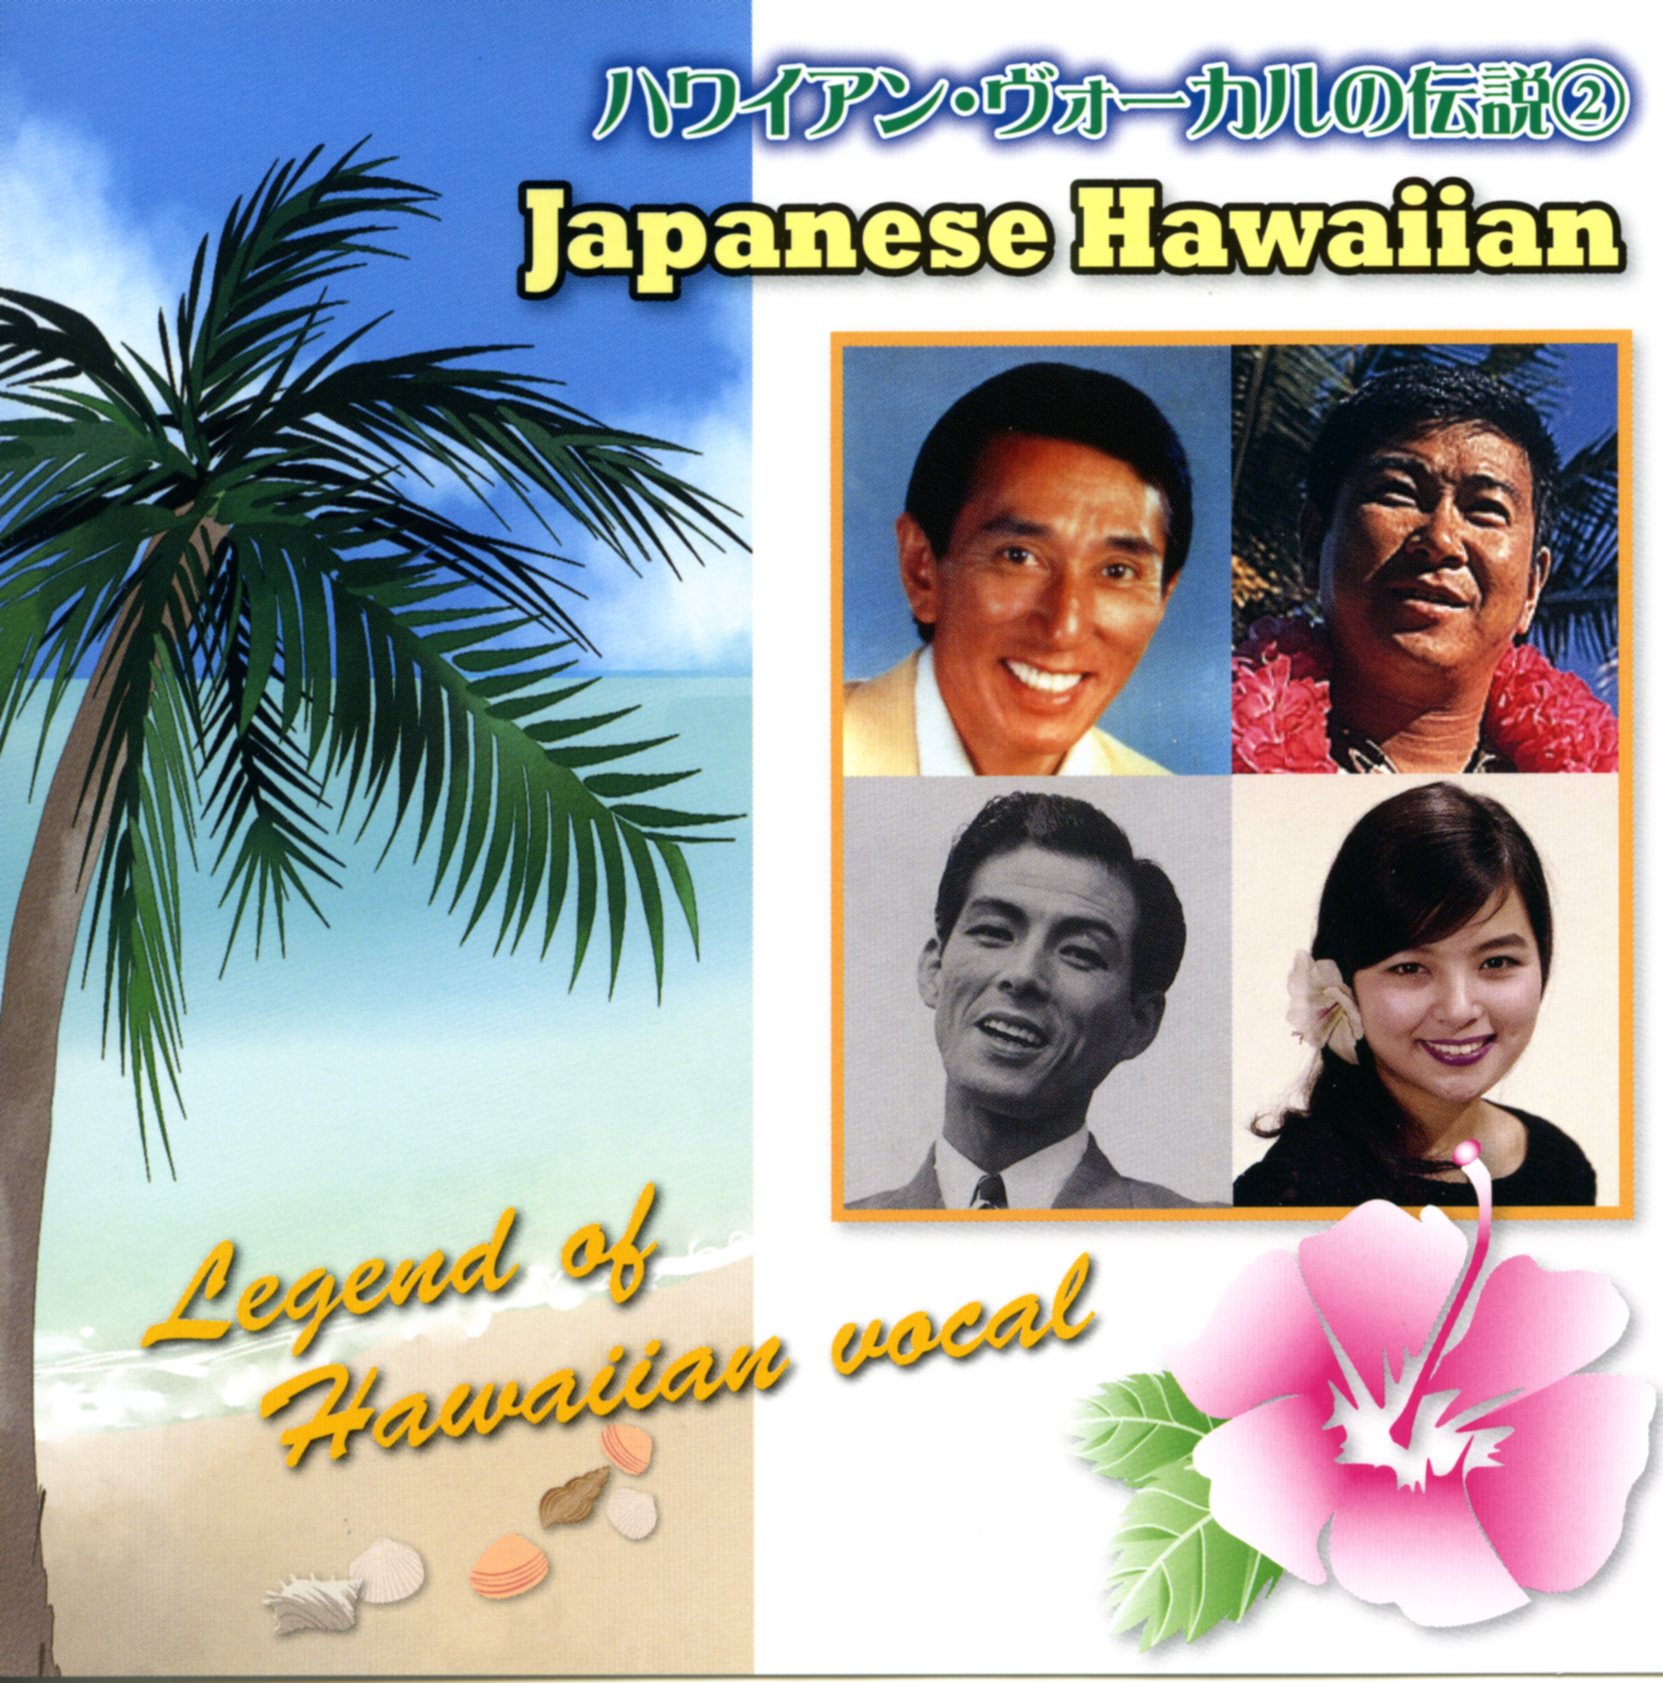  Japanese Hawaiian